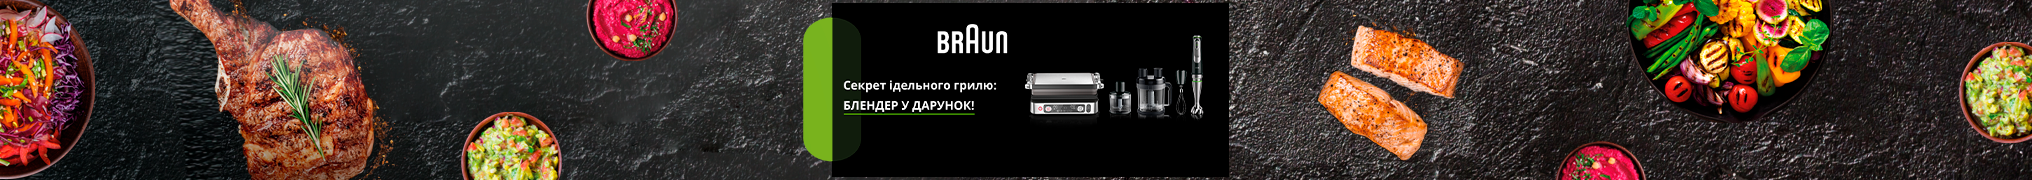 Купуй гриль Braun, та отримуй в подарунок блендер!